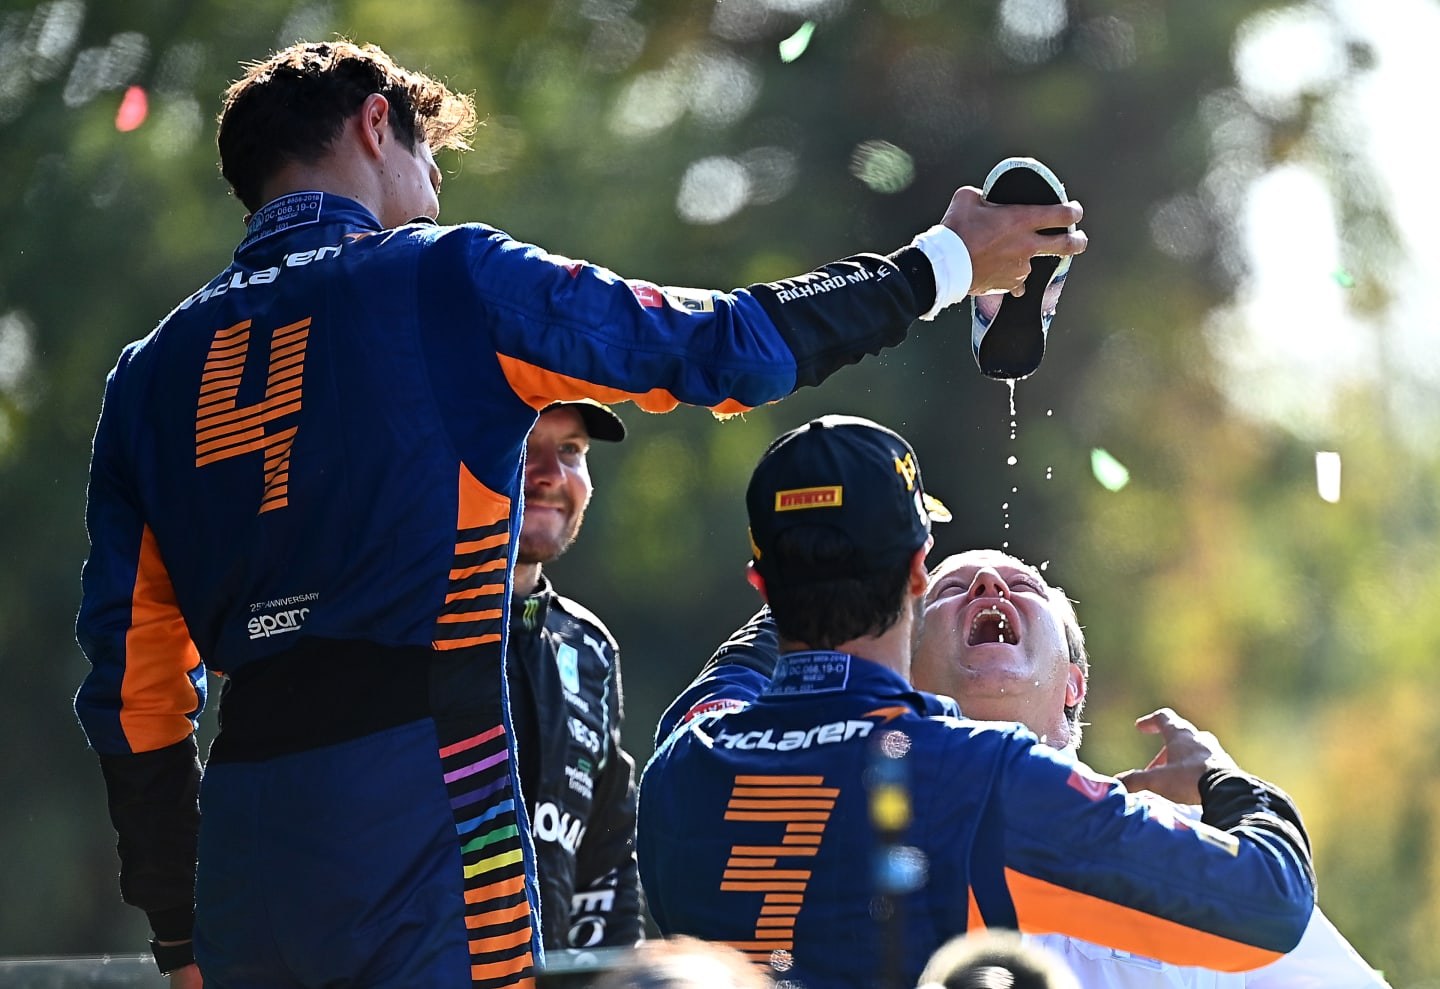 MONZA, ITALY - SEPTEMBER 12: Race winner Daniel Ricciardo of Australia and McLaren F1, second